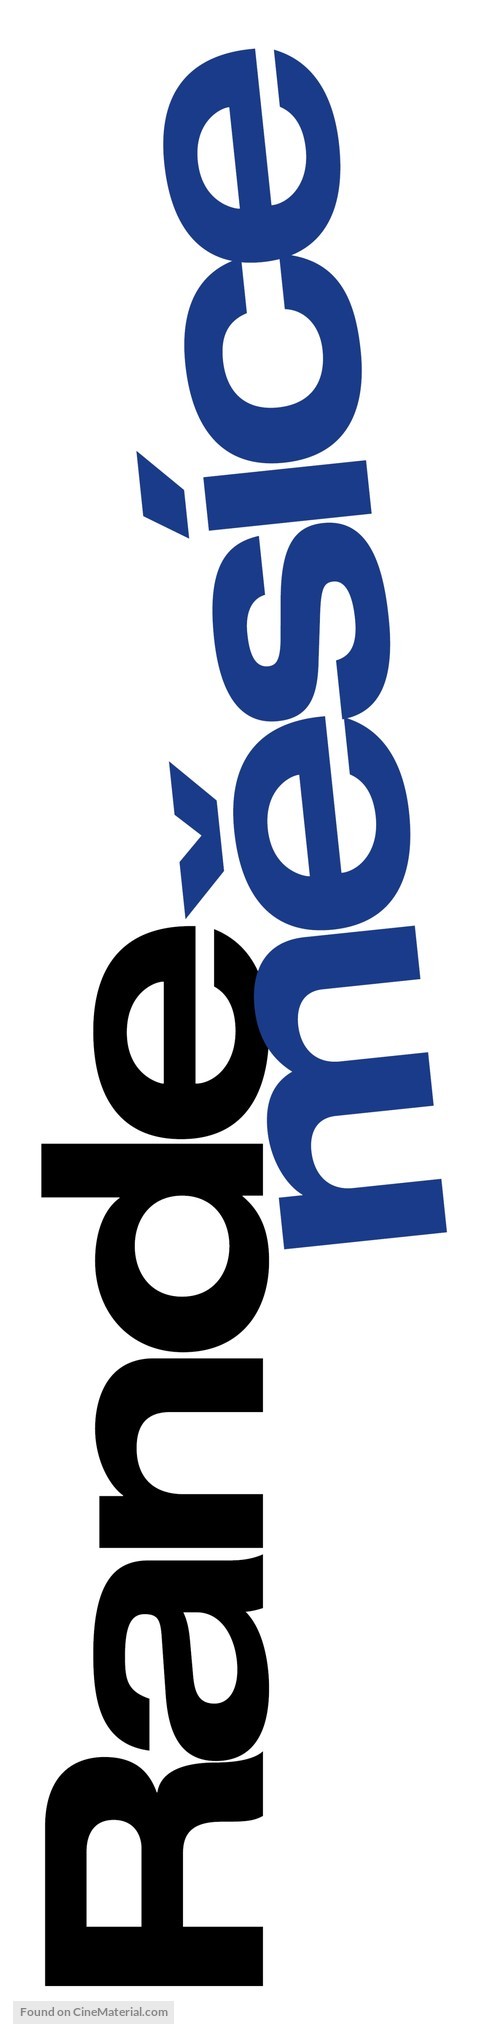 Employee Of The Month - Czech Logo